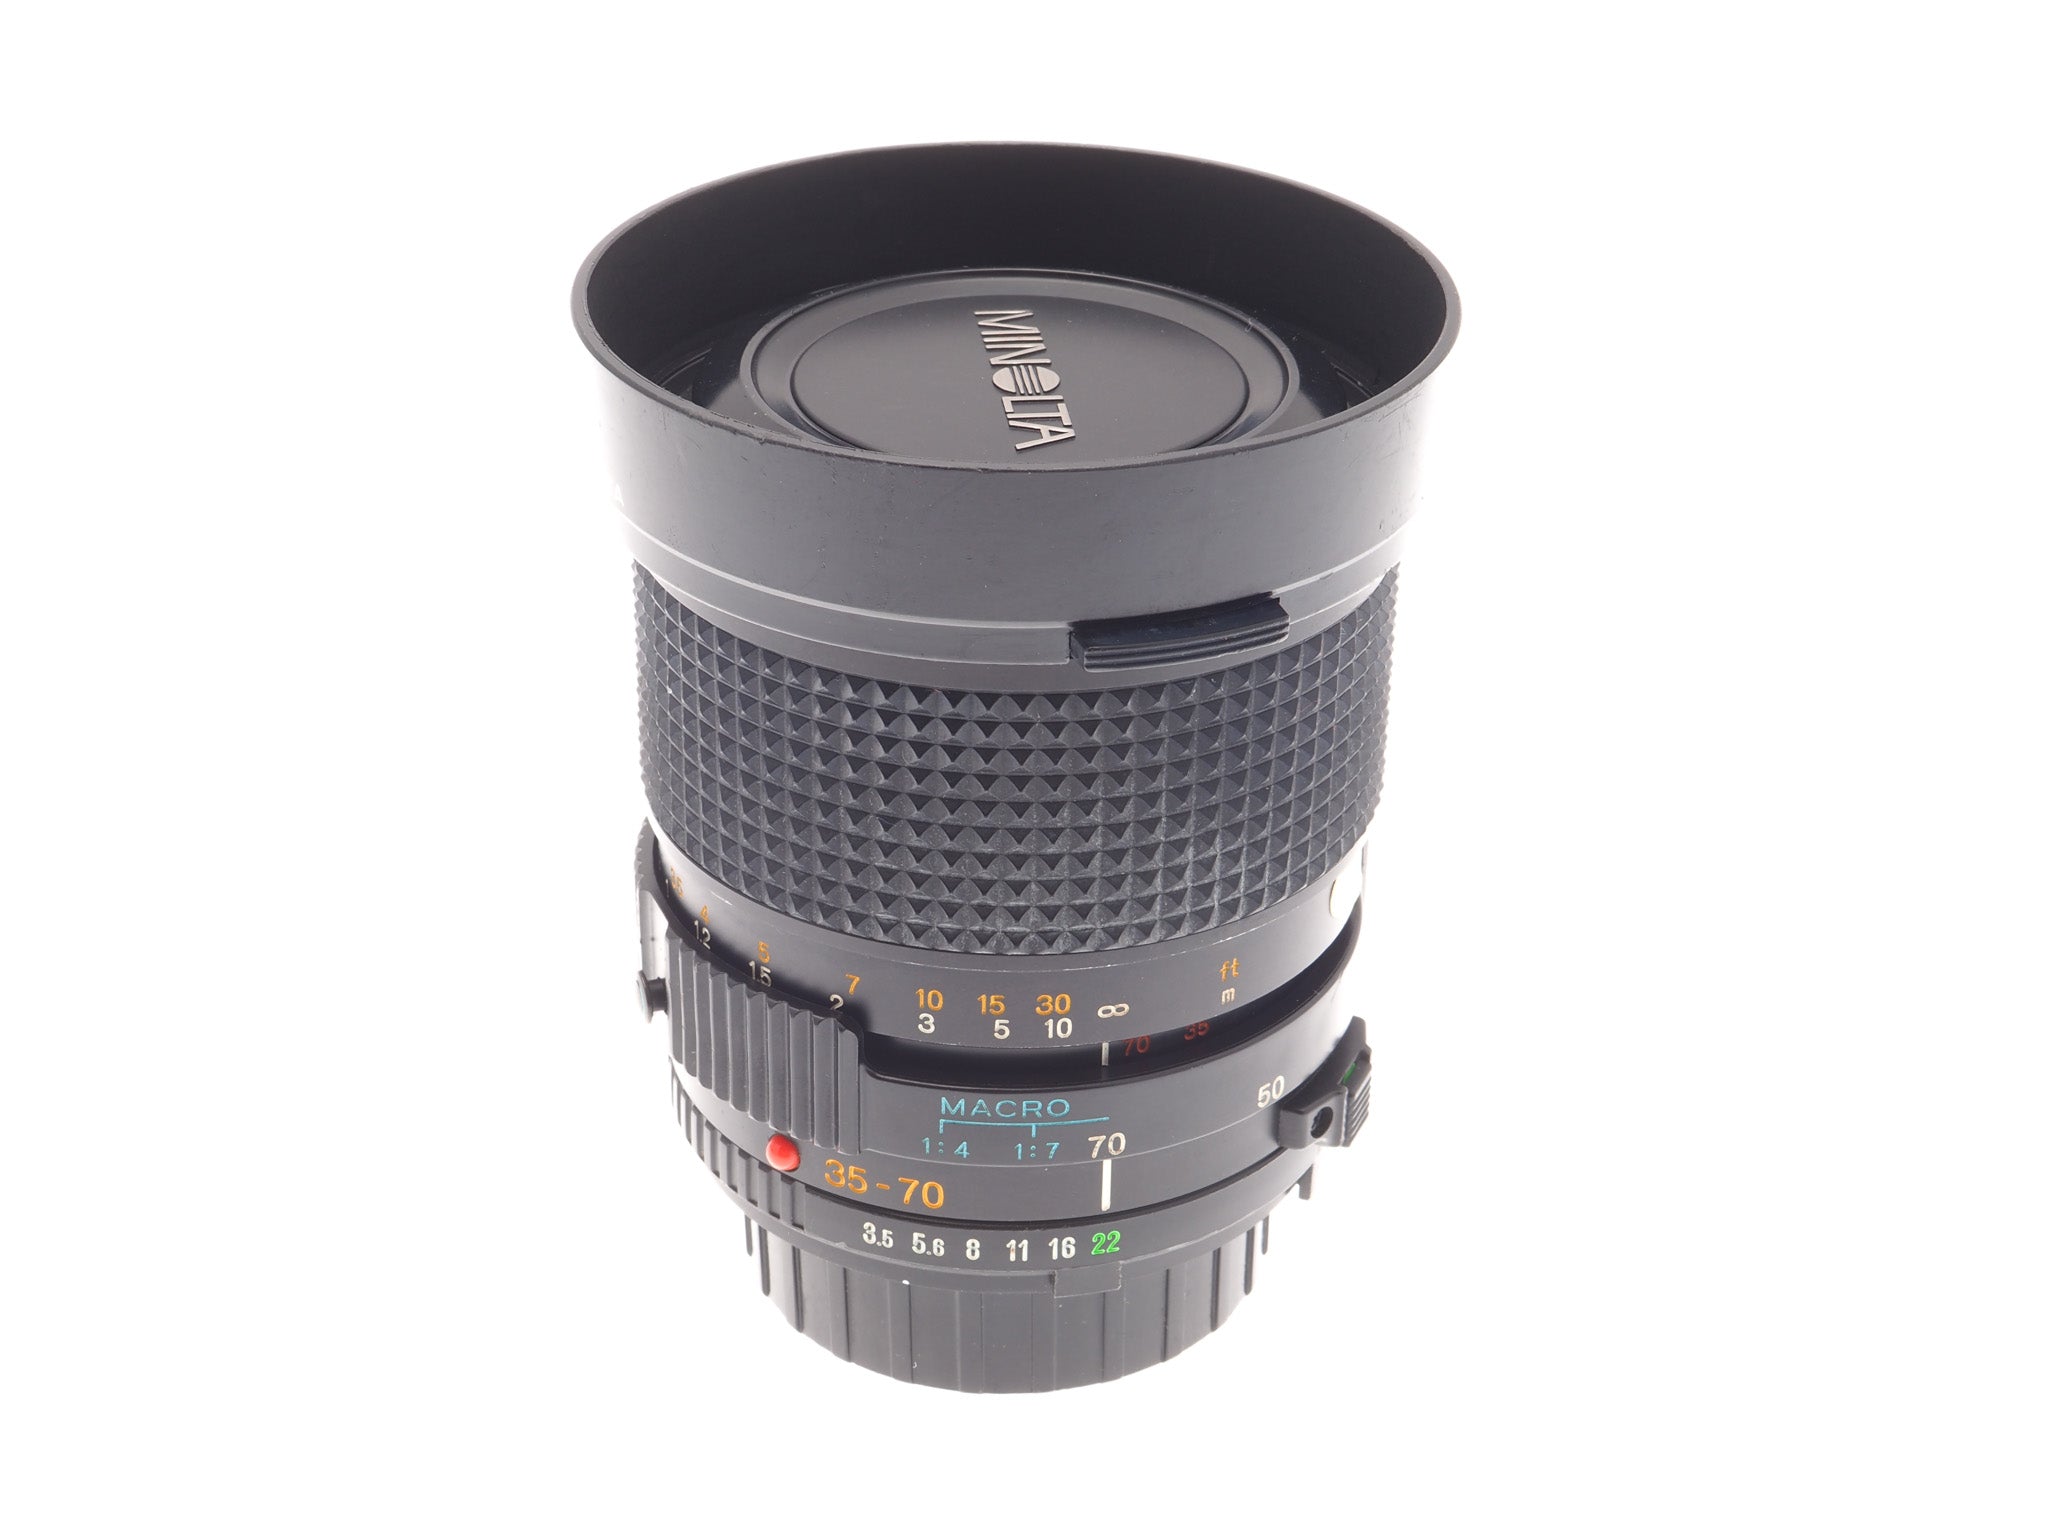 Minolta 35-70mm f3.5 MD Zoom - Lens